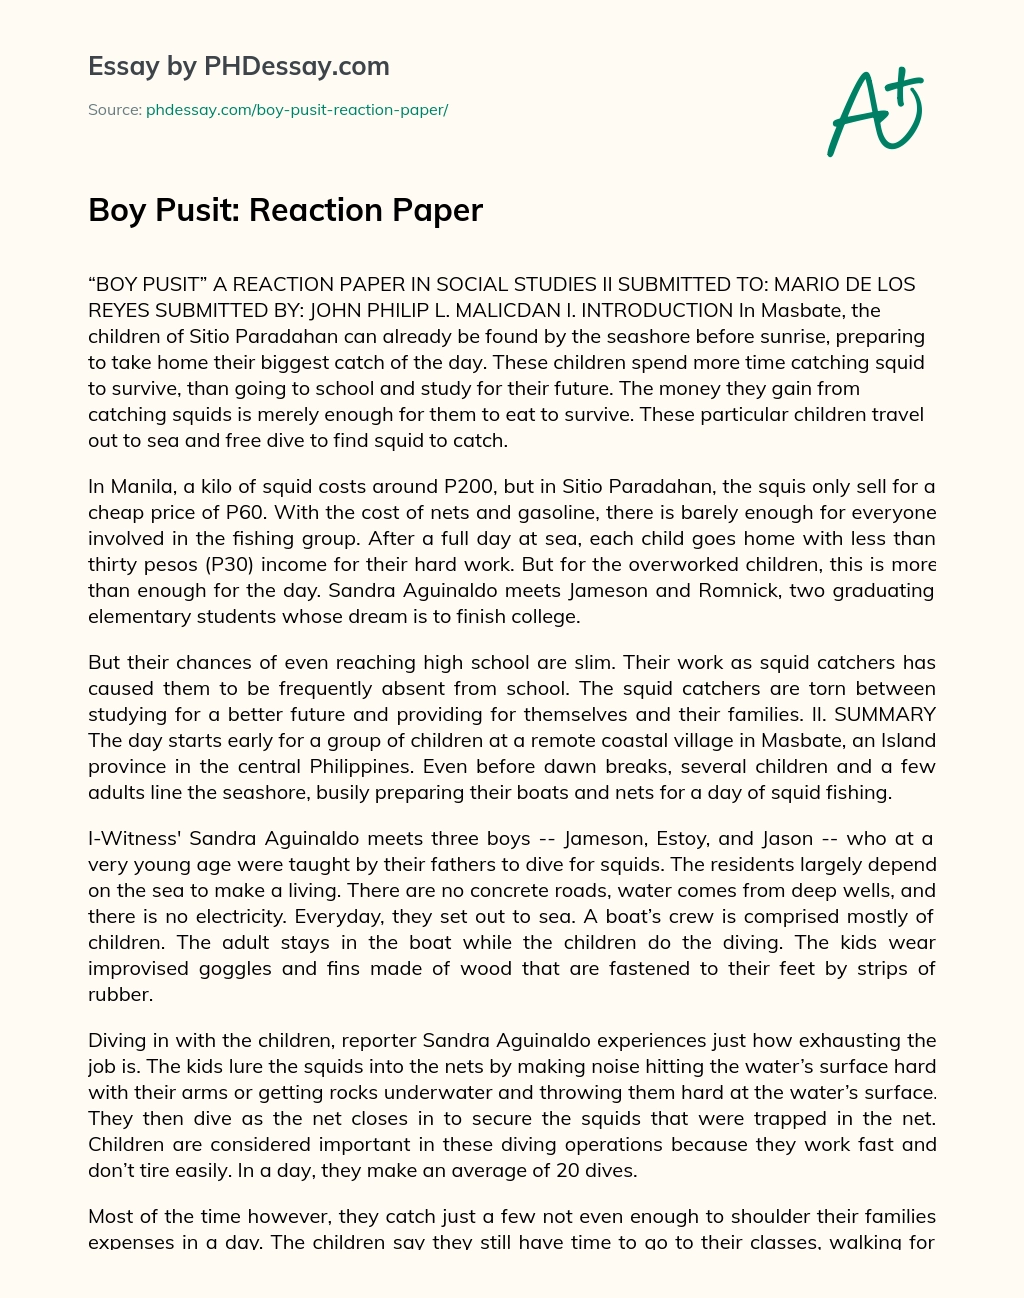 Boy Pusit: Reaction Paper essay